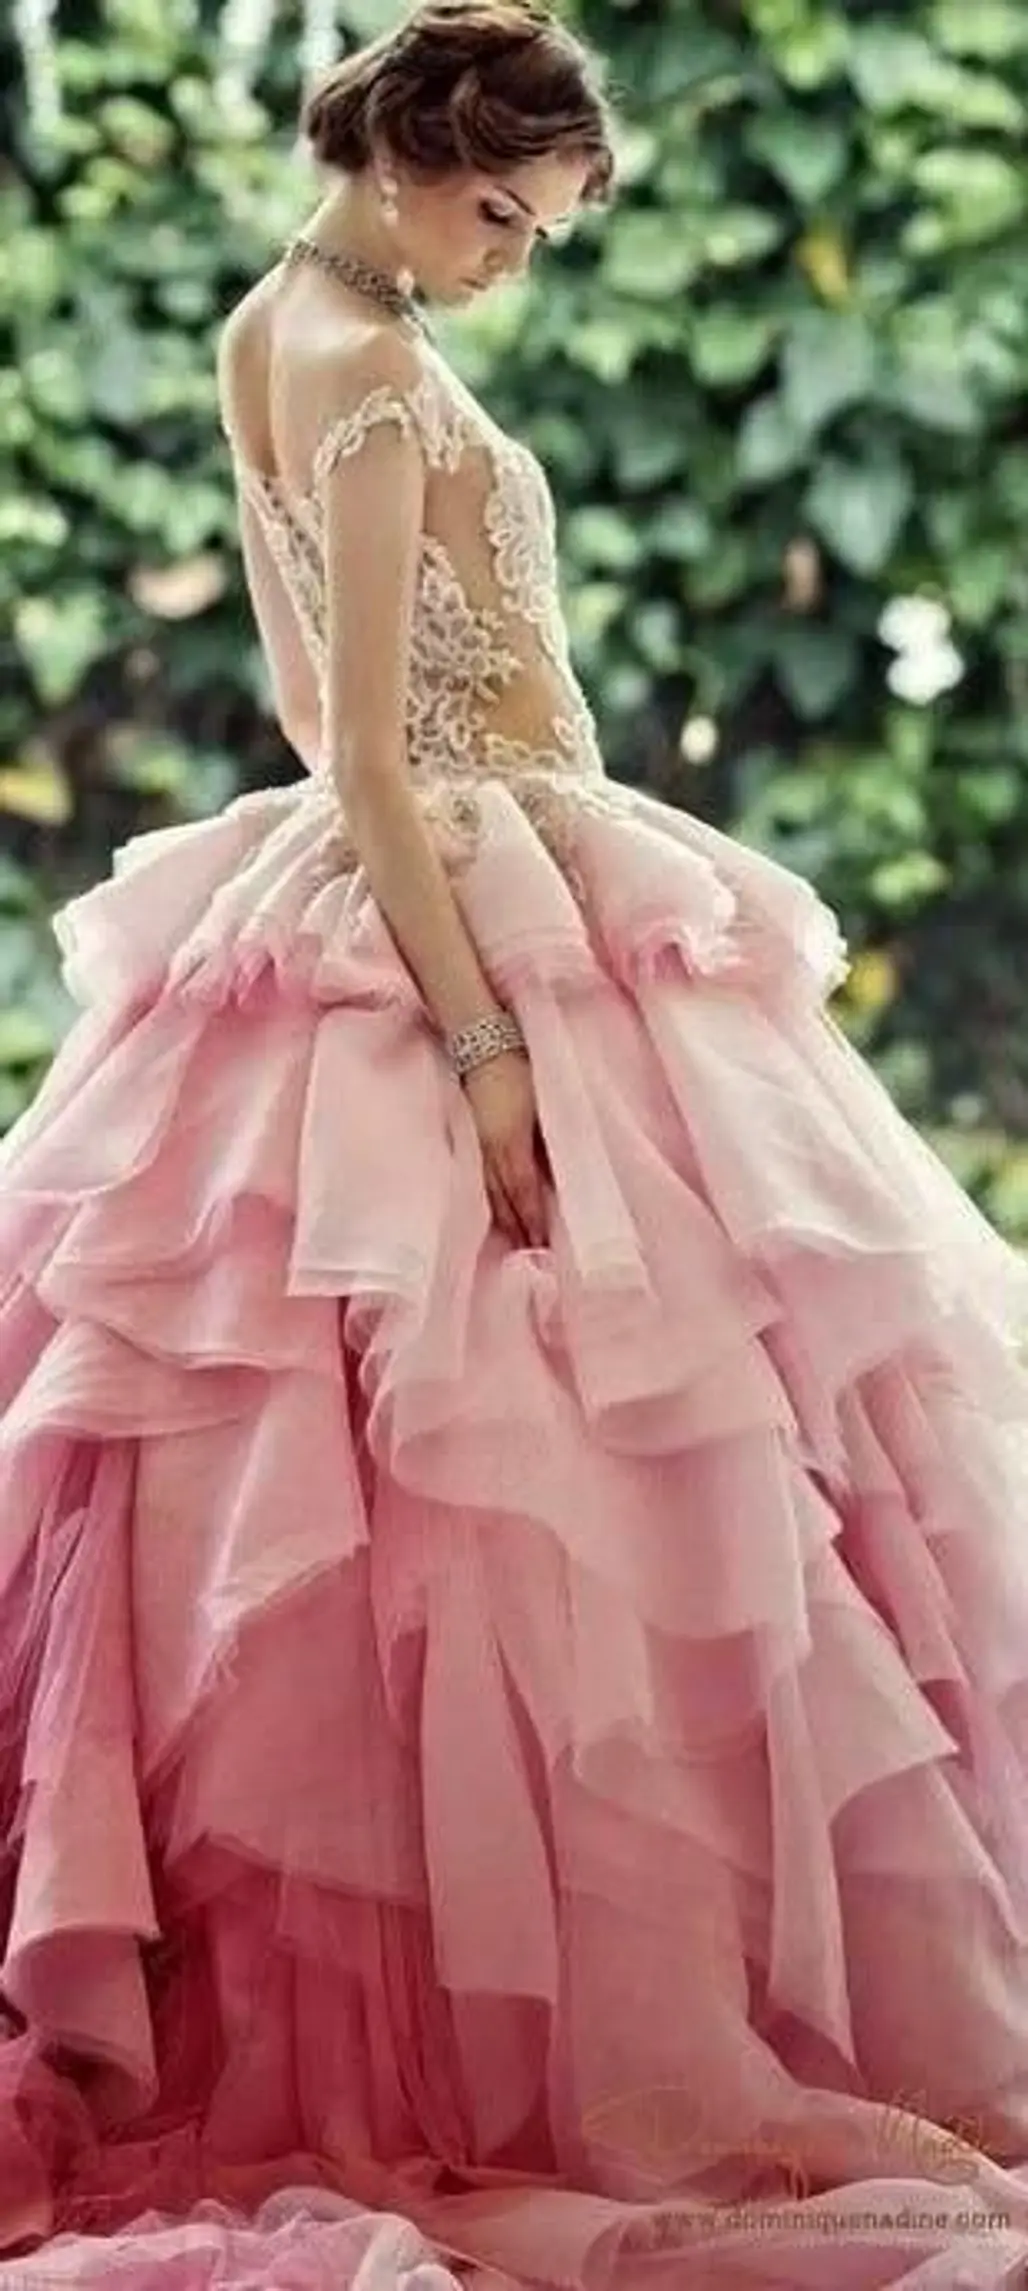 pink,wedding dress,dress,clothing,woman,